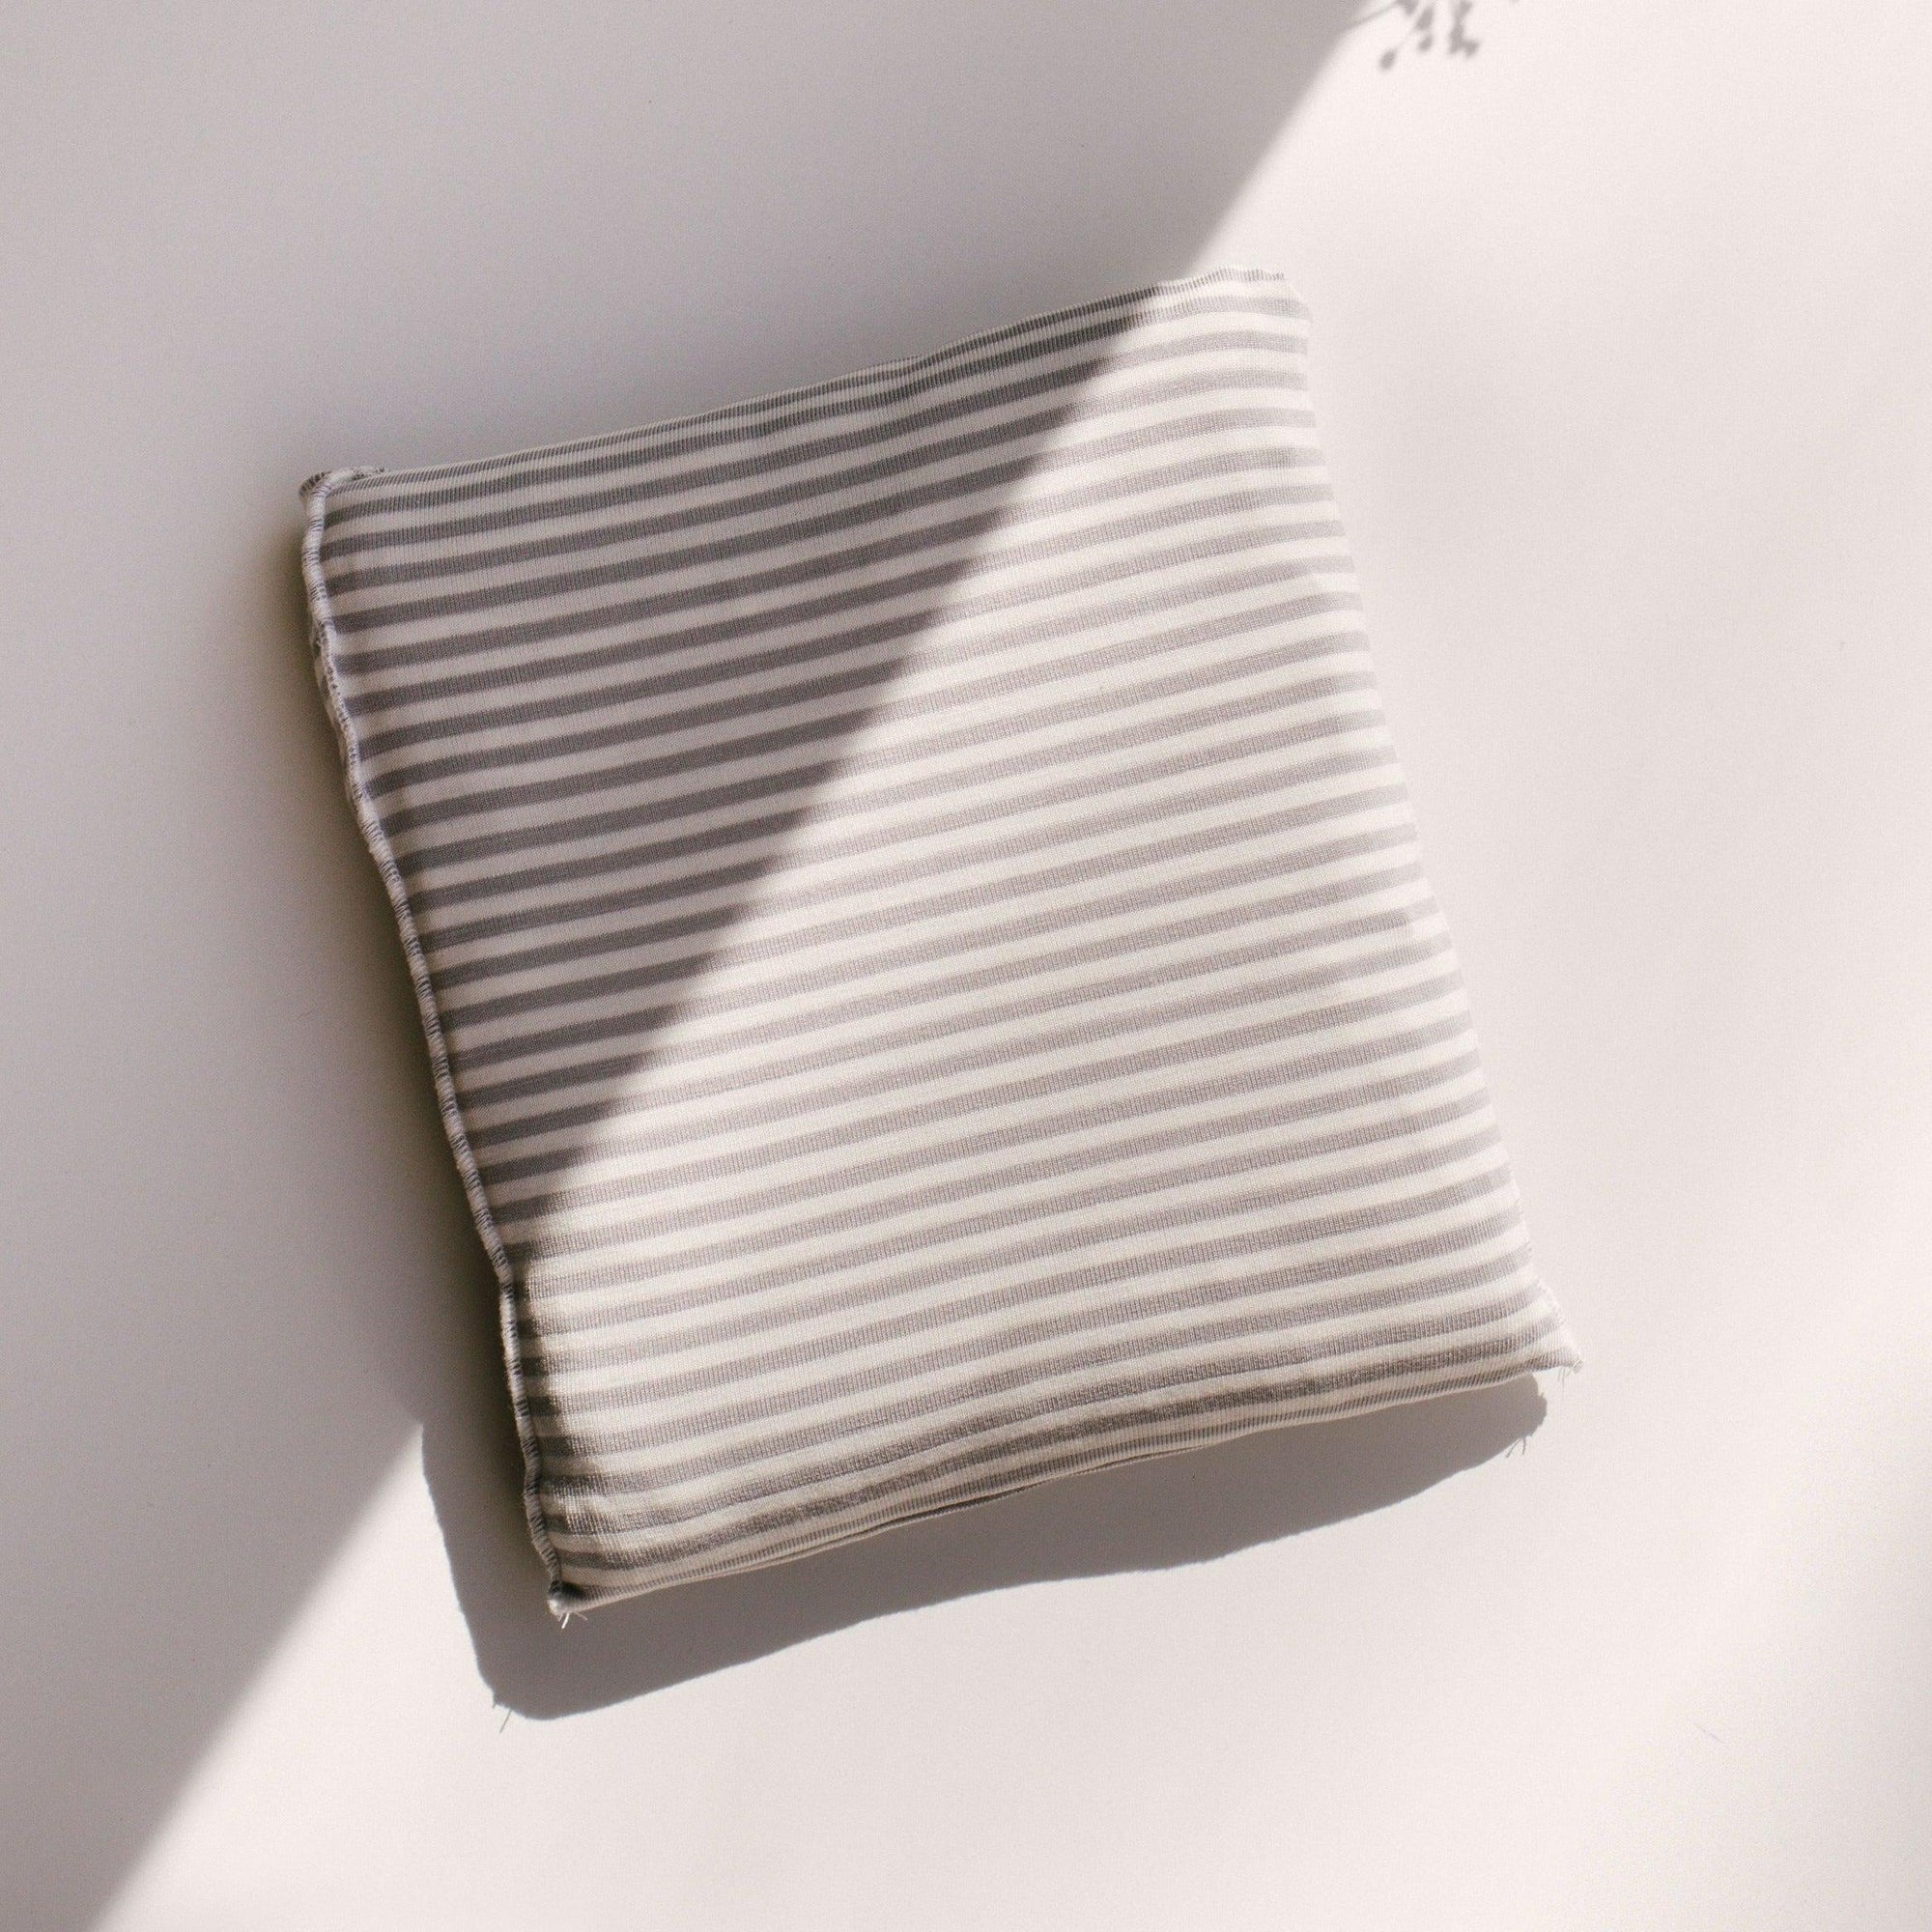 A Grey Stripe Wrap by Chekoh on a white surface.